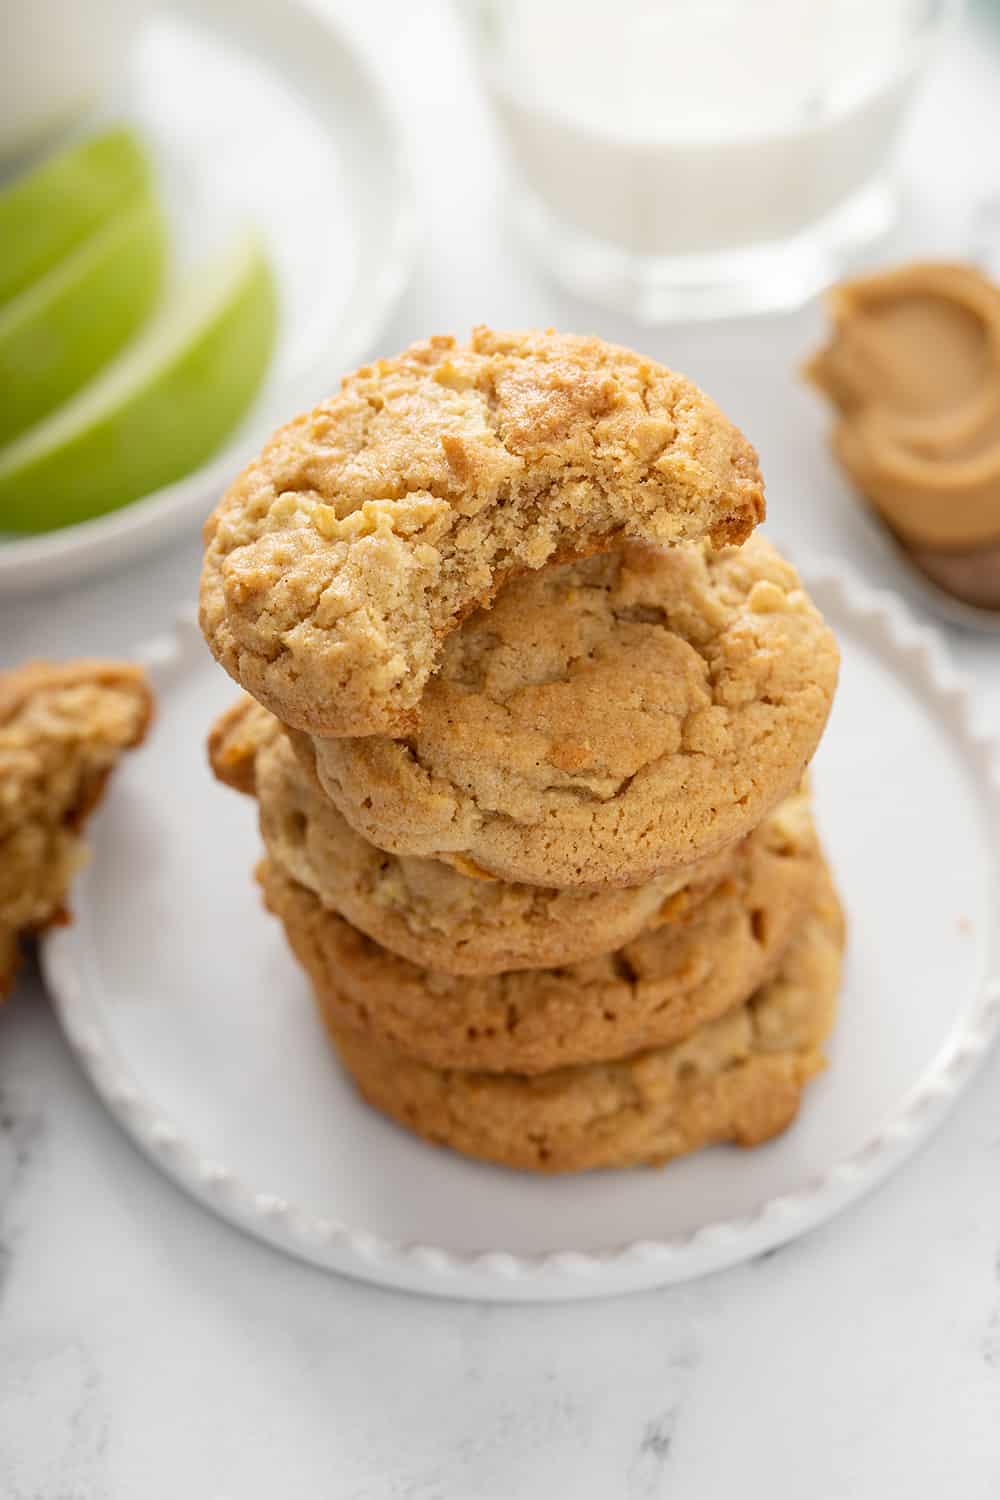 https://www.mybakingaddiction.com/wp-content/uploads/2012/10/stacked-apple-peanut-butter-cookies.jpg